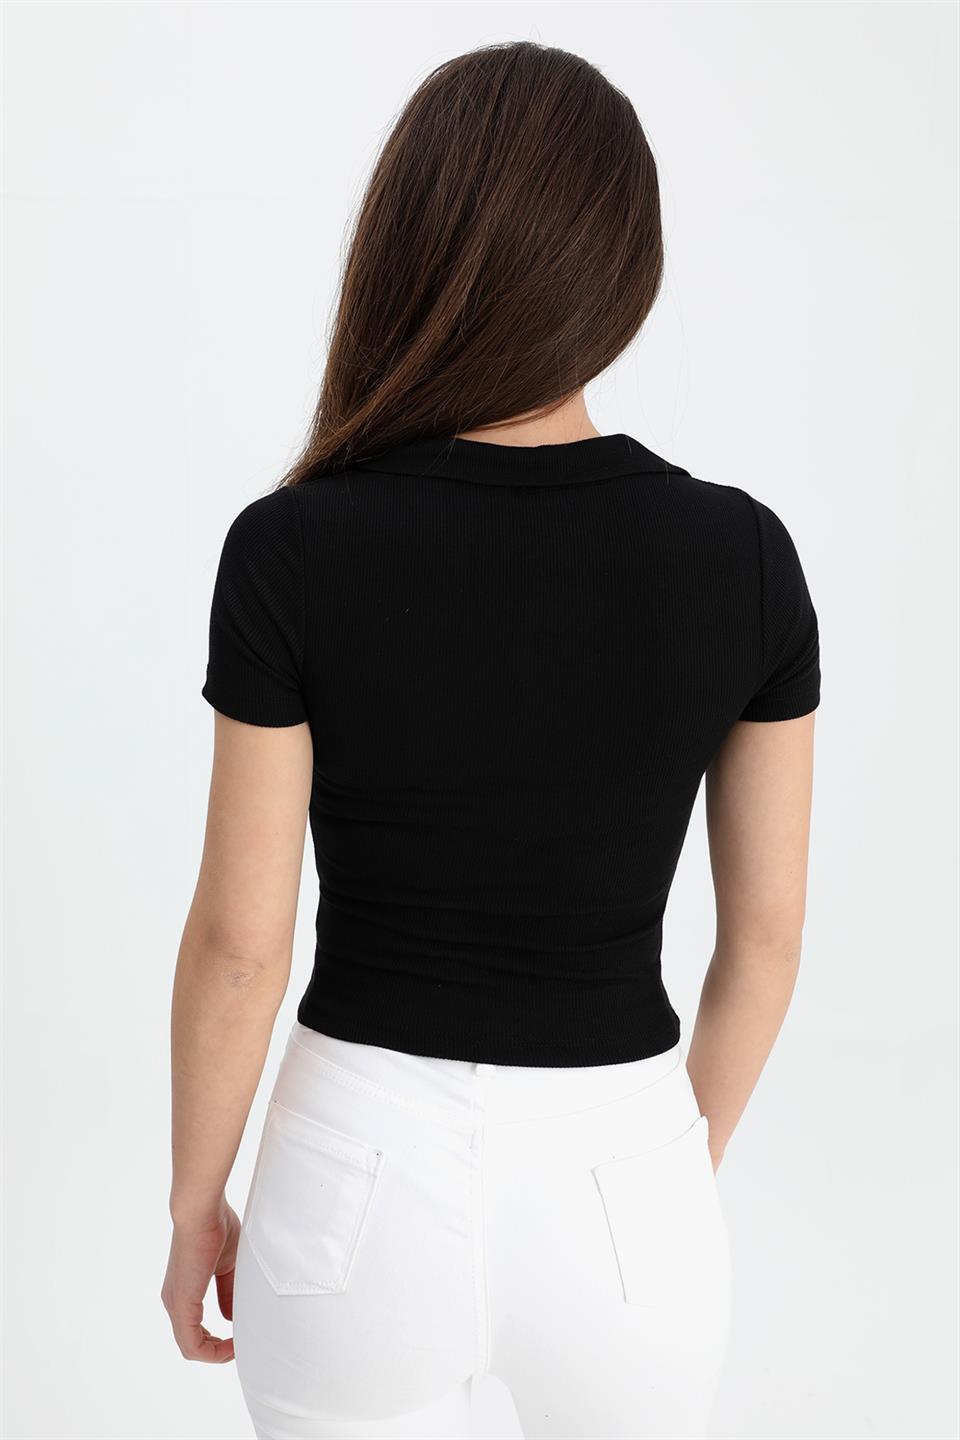 Women's Blouse Shirt Collar Short Sleeve Camisole - Black - STREETMODE ™